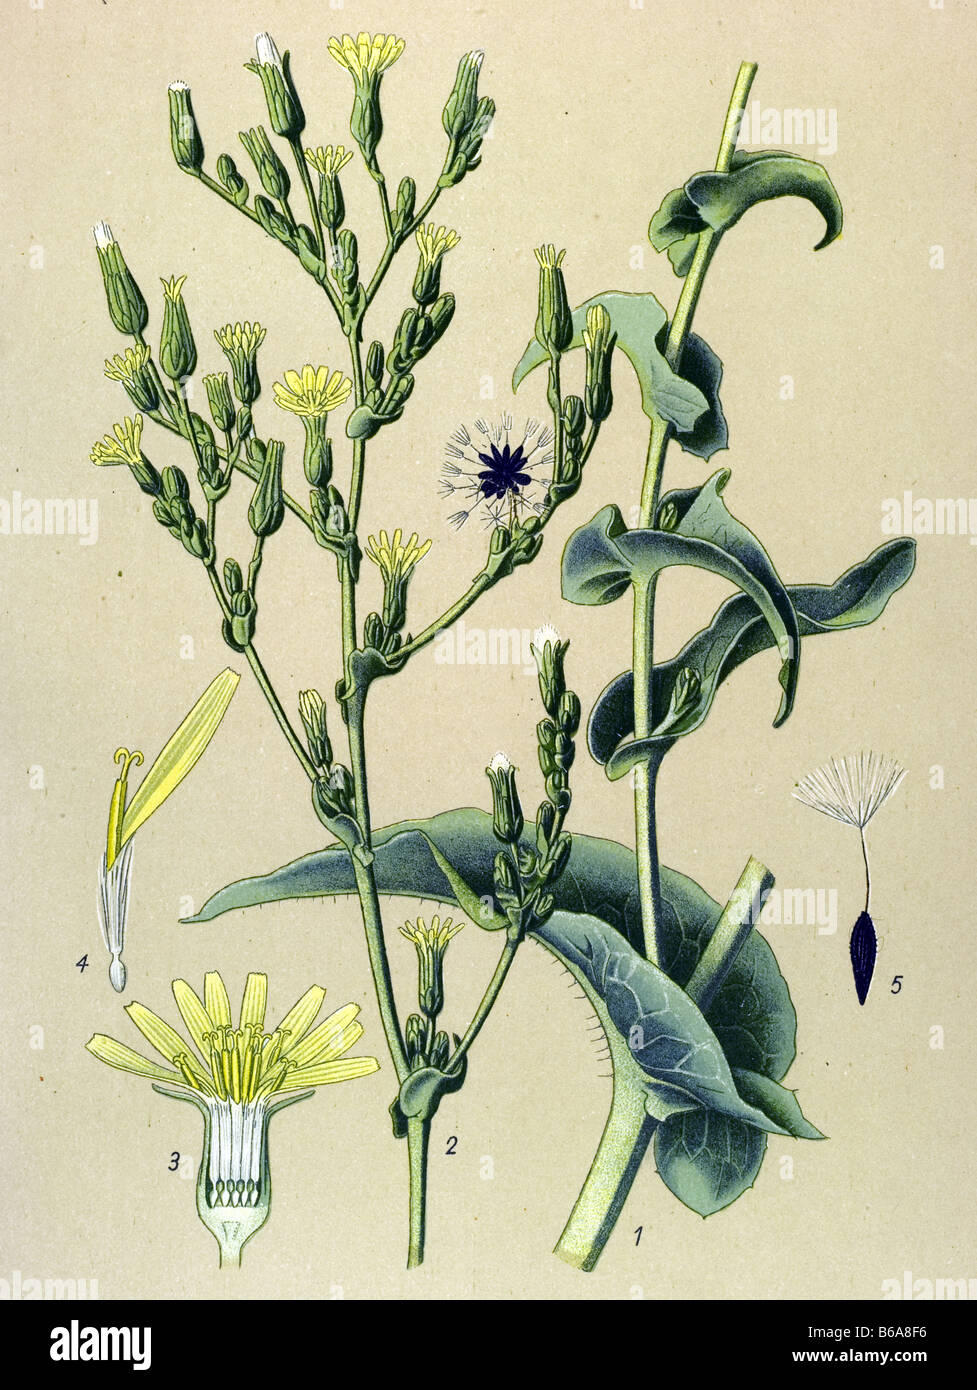 Wild Lettuce, Lactuca virosa poisonous plants illustrations Stock Photo